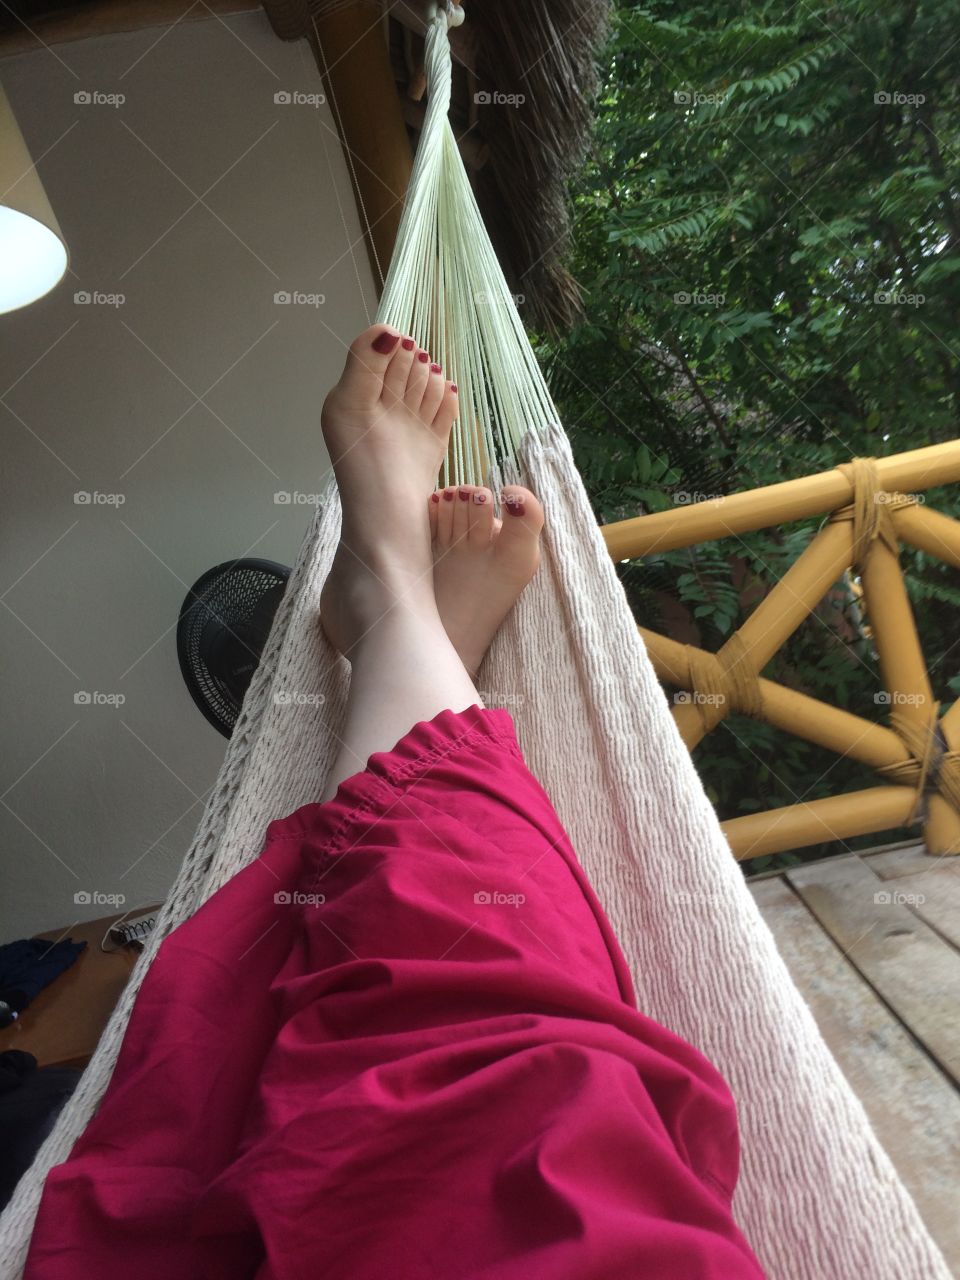 Feet in a hammock 